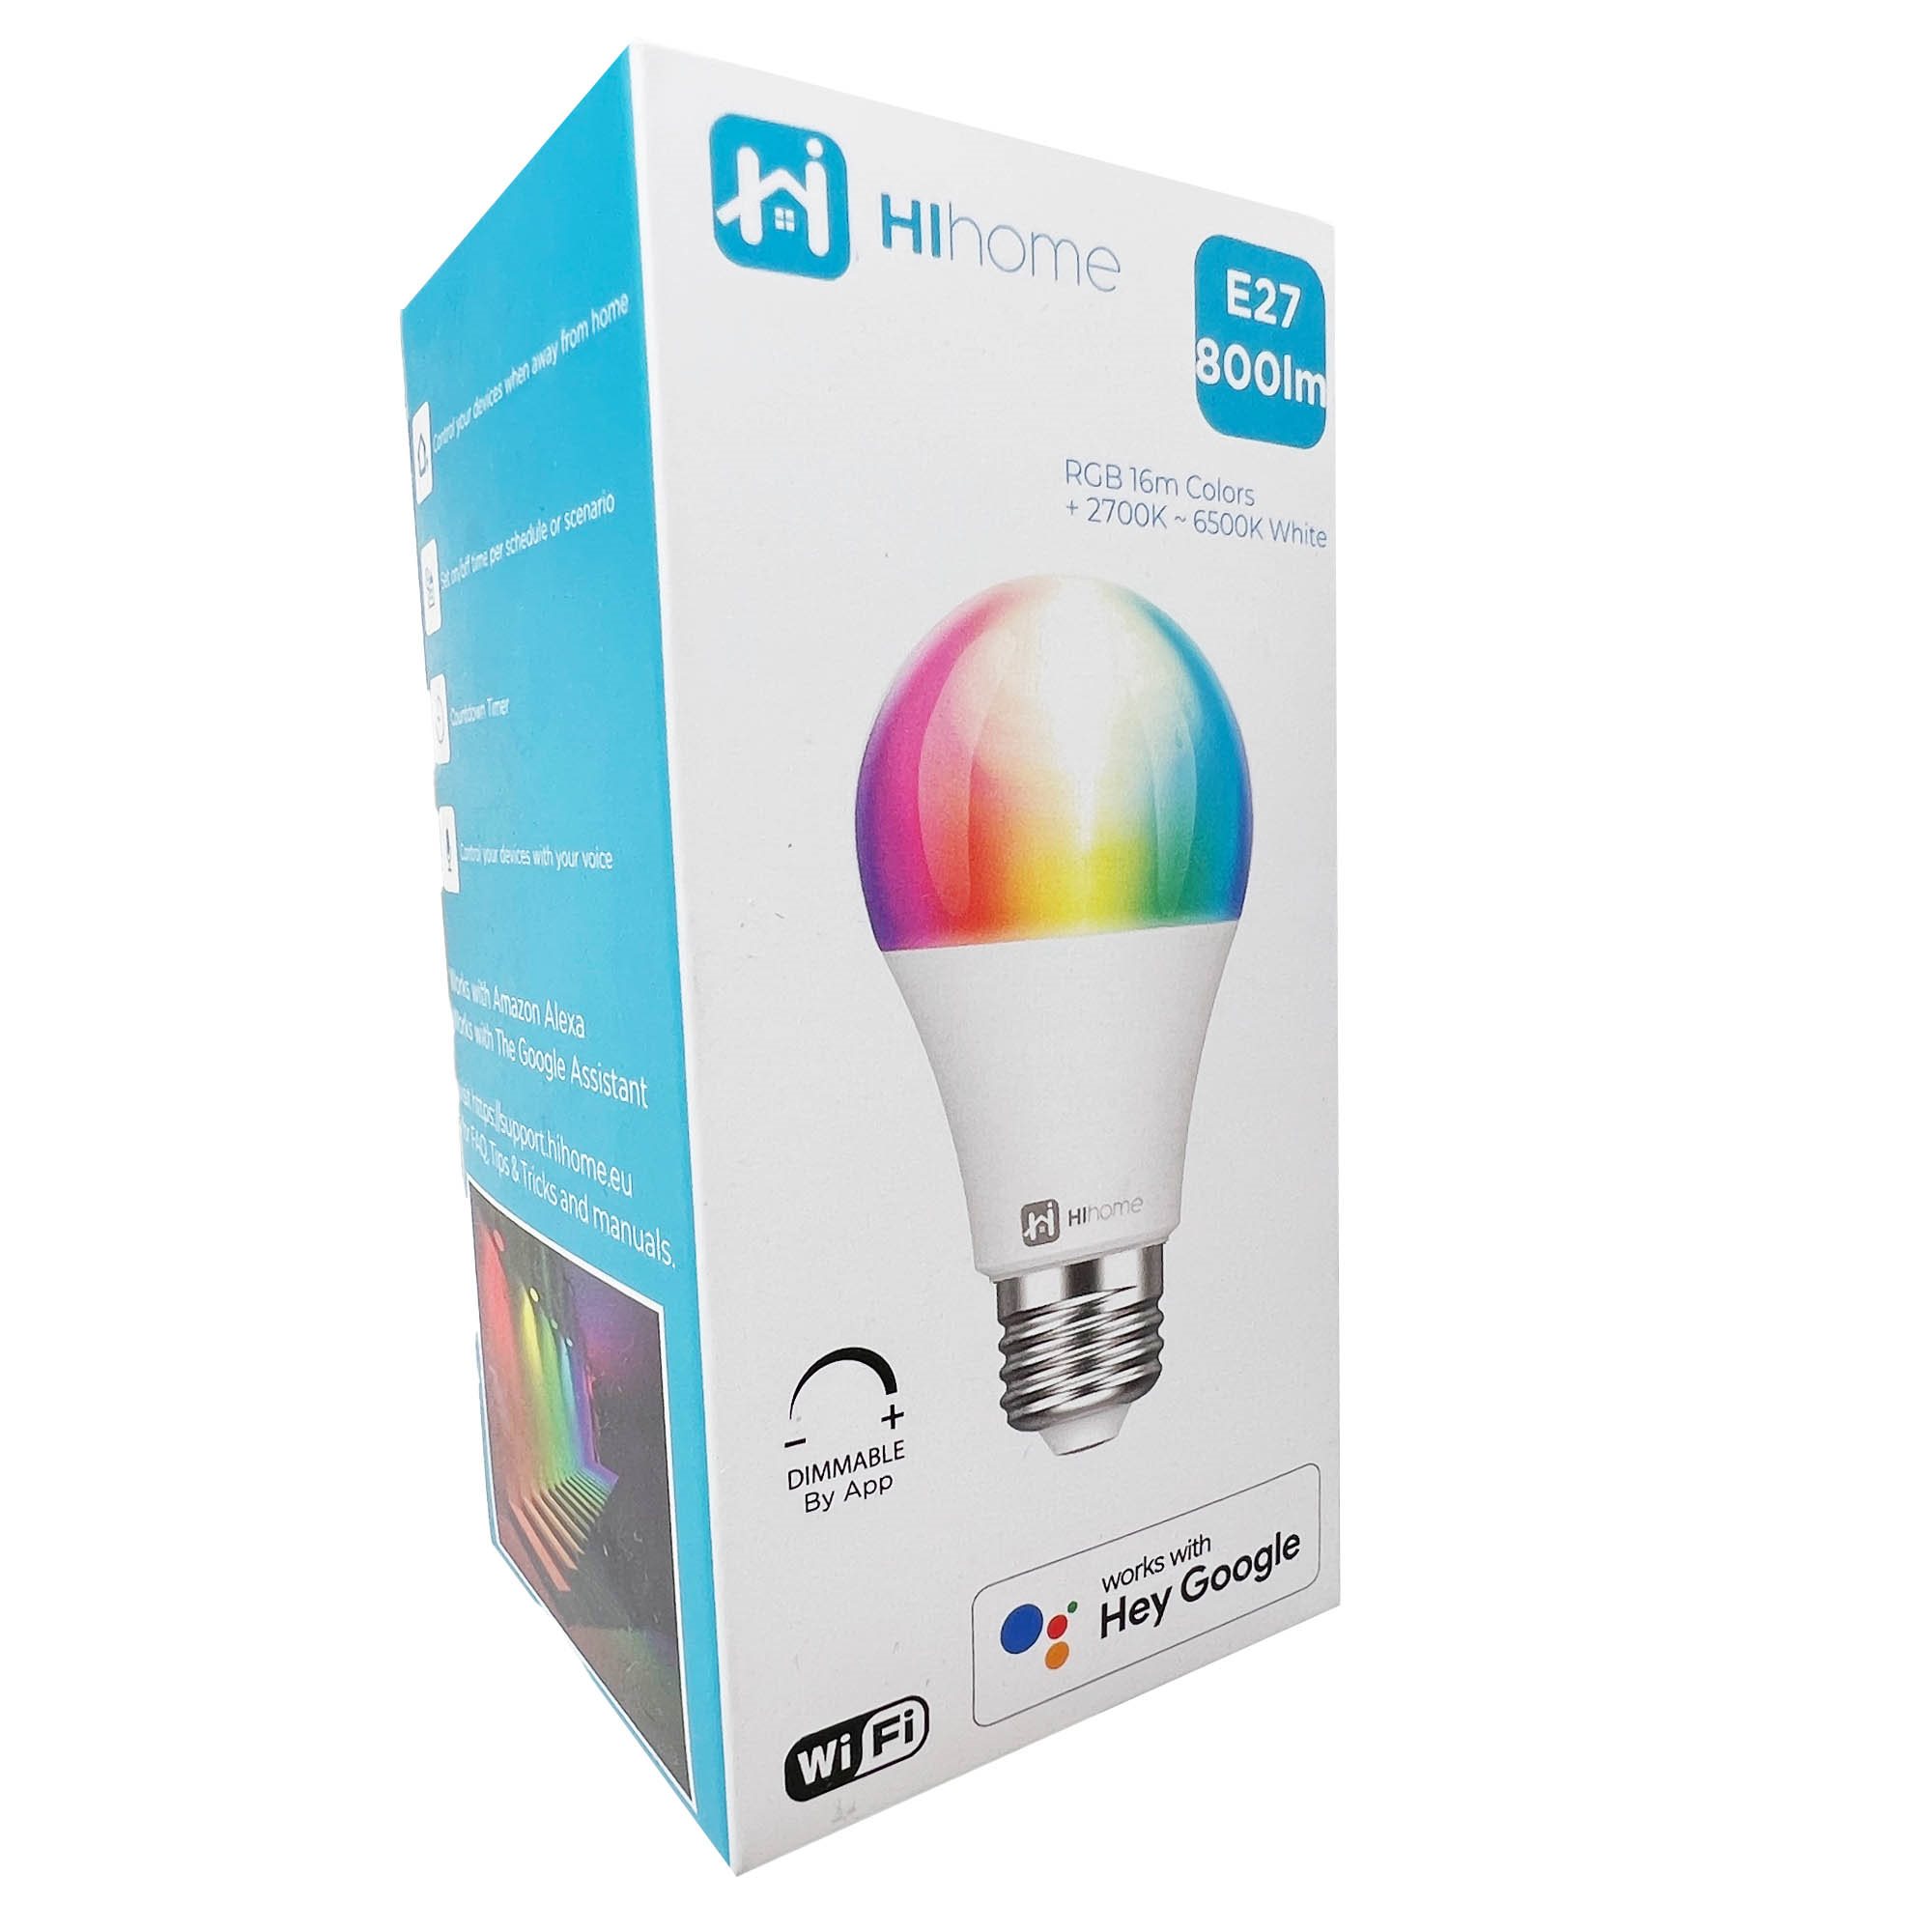 Smart LED pære Gen.2 RGB 16M + Varm 2700K til Cool Hvid E27